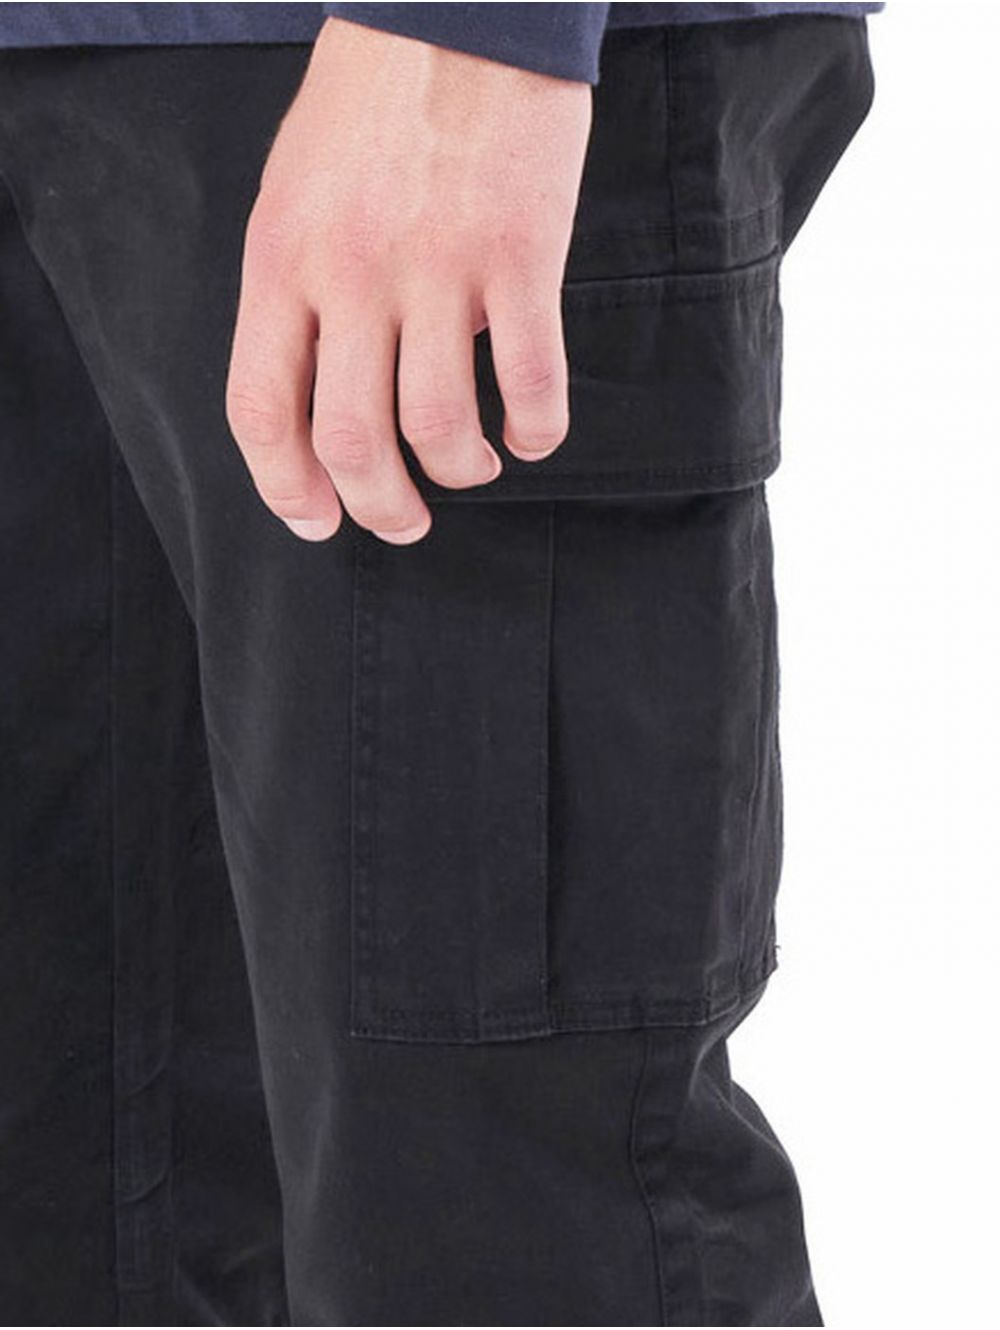 Emerson Tactical BDU G3 Combat Pants Trousers Assault Uniform +Knee Pads  Gen3 WL | eBay